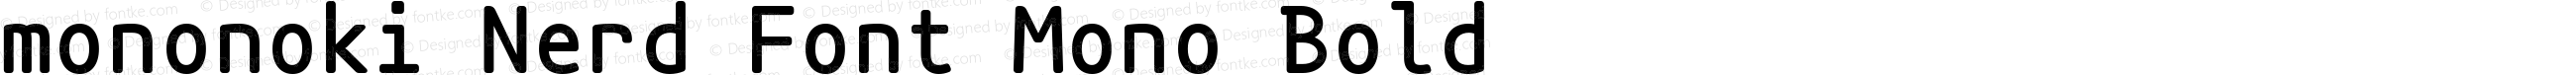 mononoki Bold Nerd Font Complete Mono